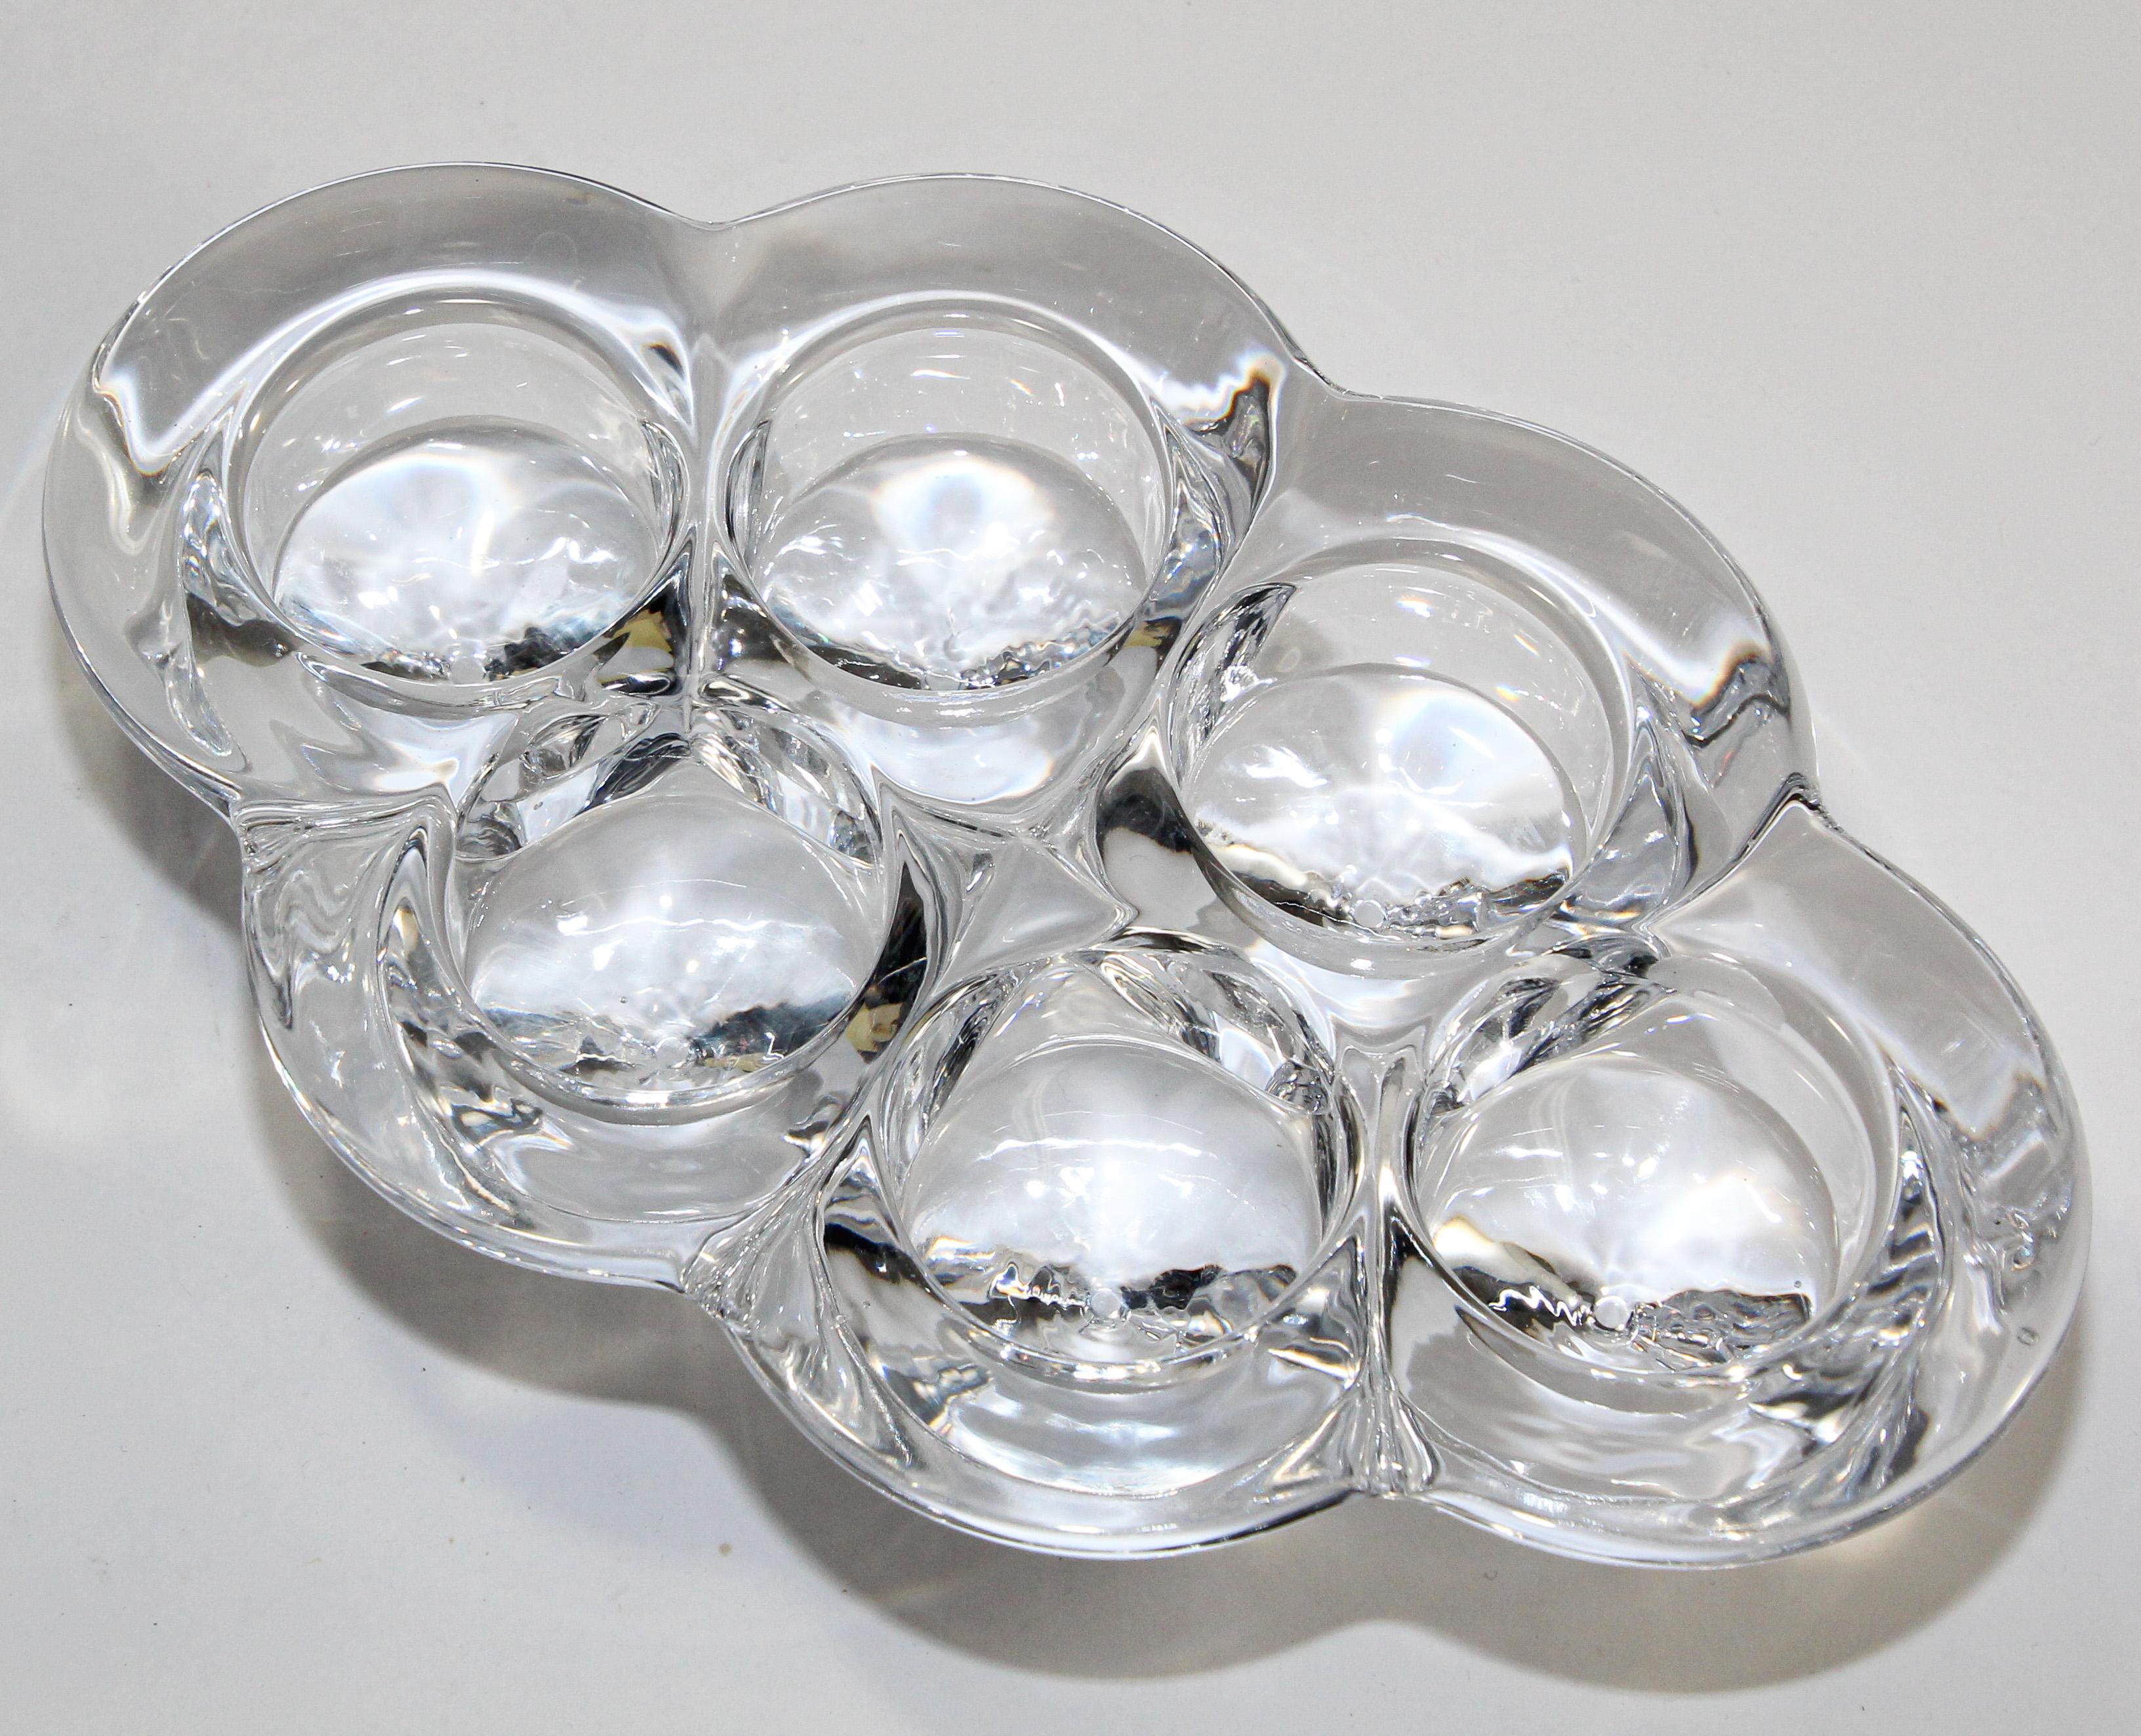 Villeroy et Boch Made in Germany Bougies votives en cristal.
Un très beau bougeoir contemporain en cristal clair de Villeroy & Boch,
Porte-bougies pour 6 bougies Villeroy & Boch.
Magnifique verre de cristal moderne en forme de